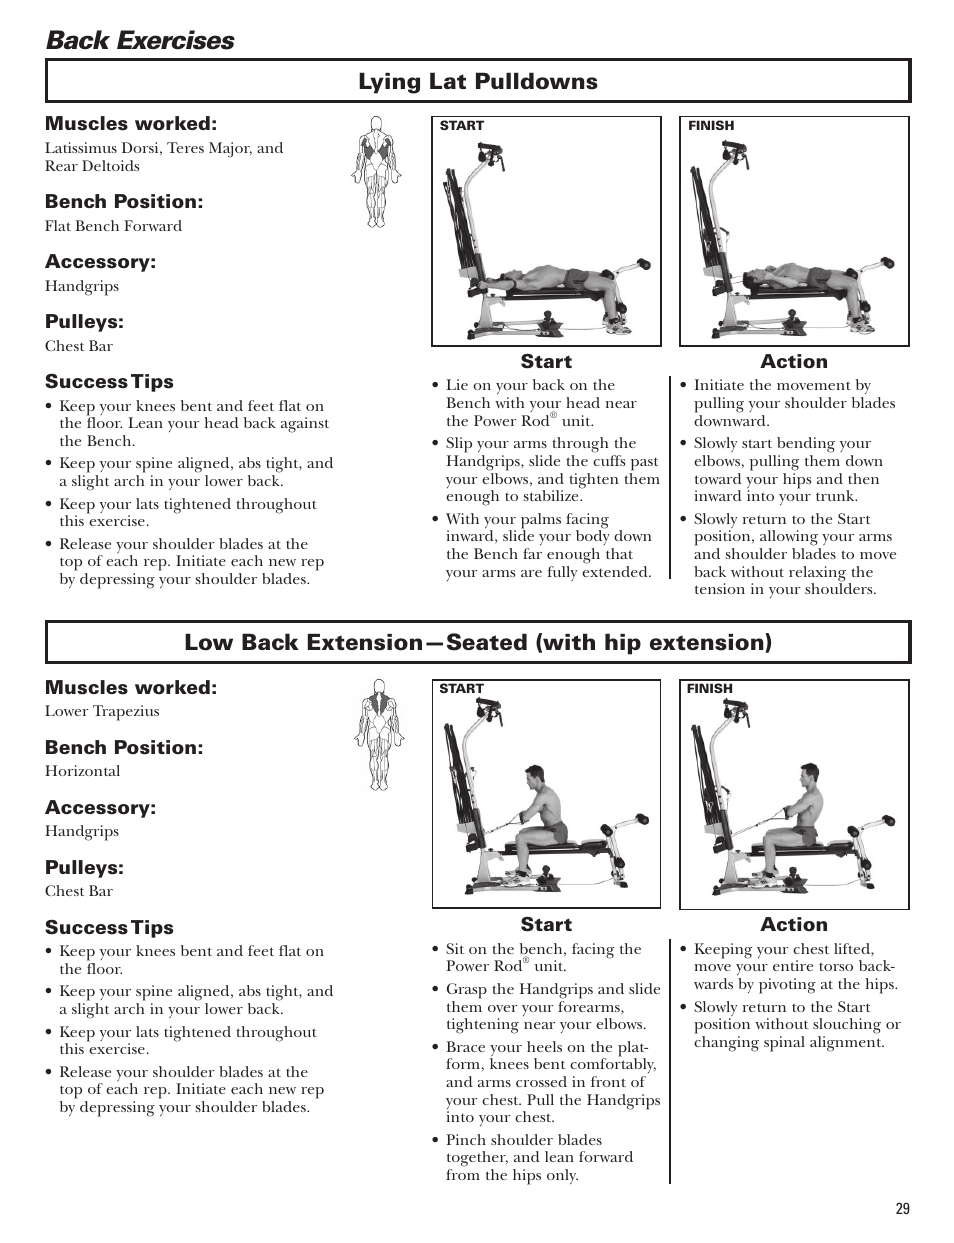 Back exercises | Bowflex Blaze Home Gym User Manual | Page 29 / 80